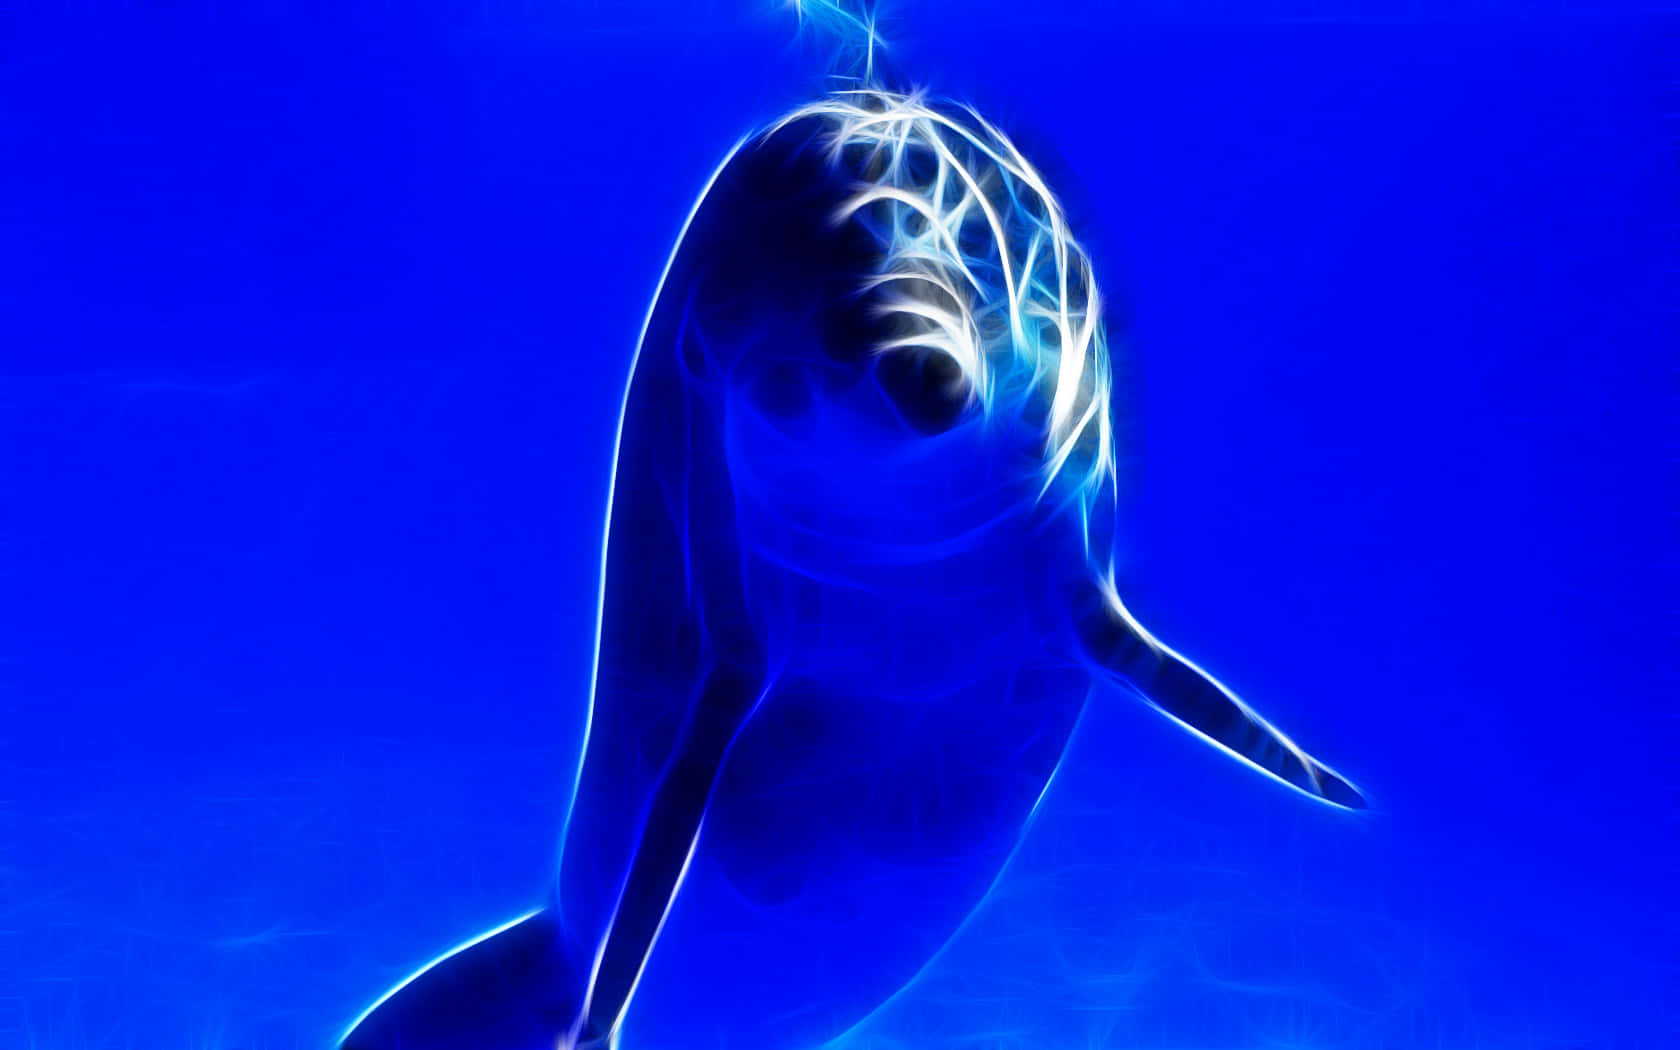 Cute Dolphin Blue Ocean Water Background Wallpaper